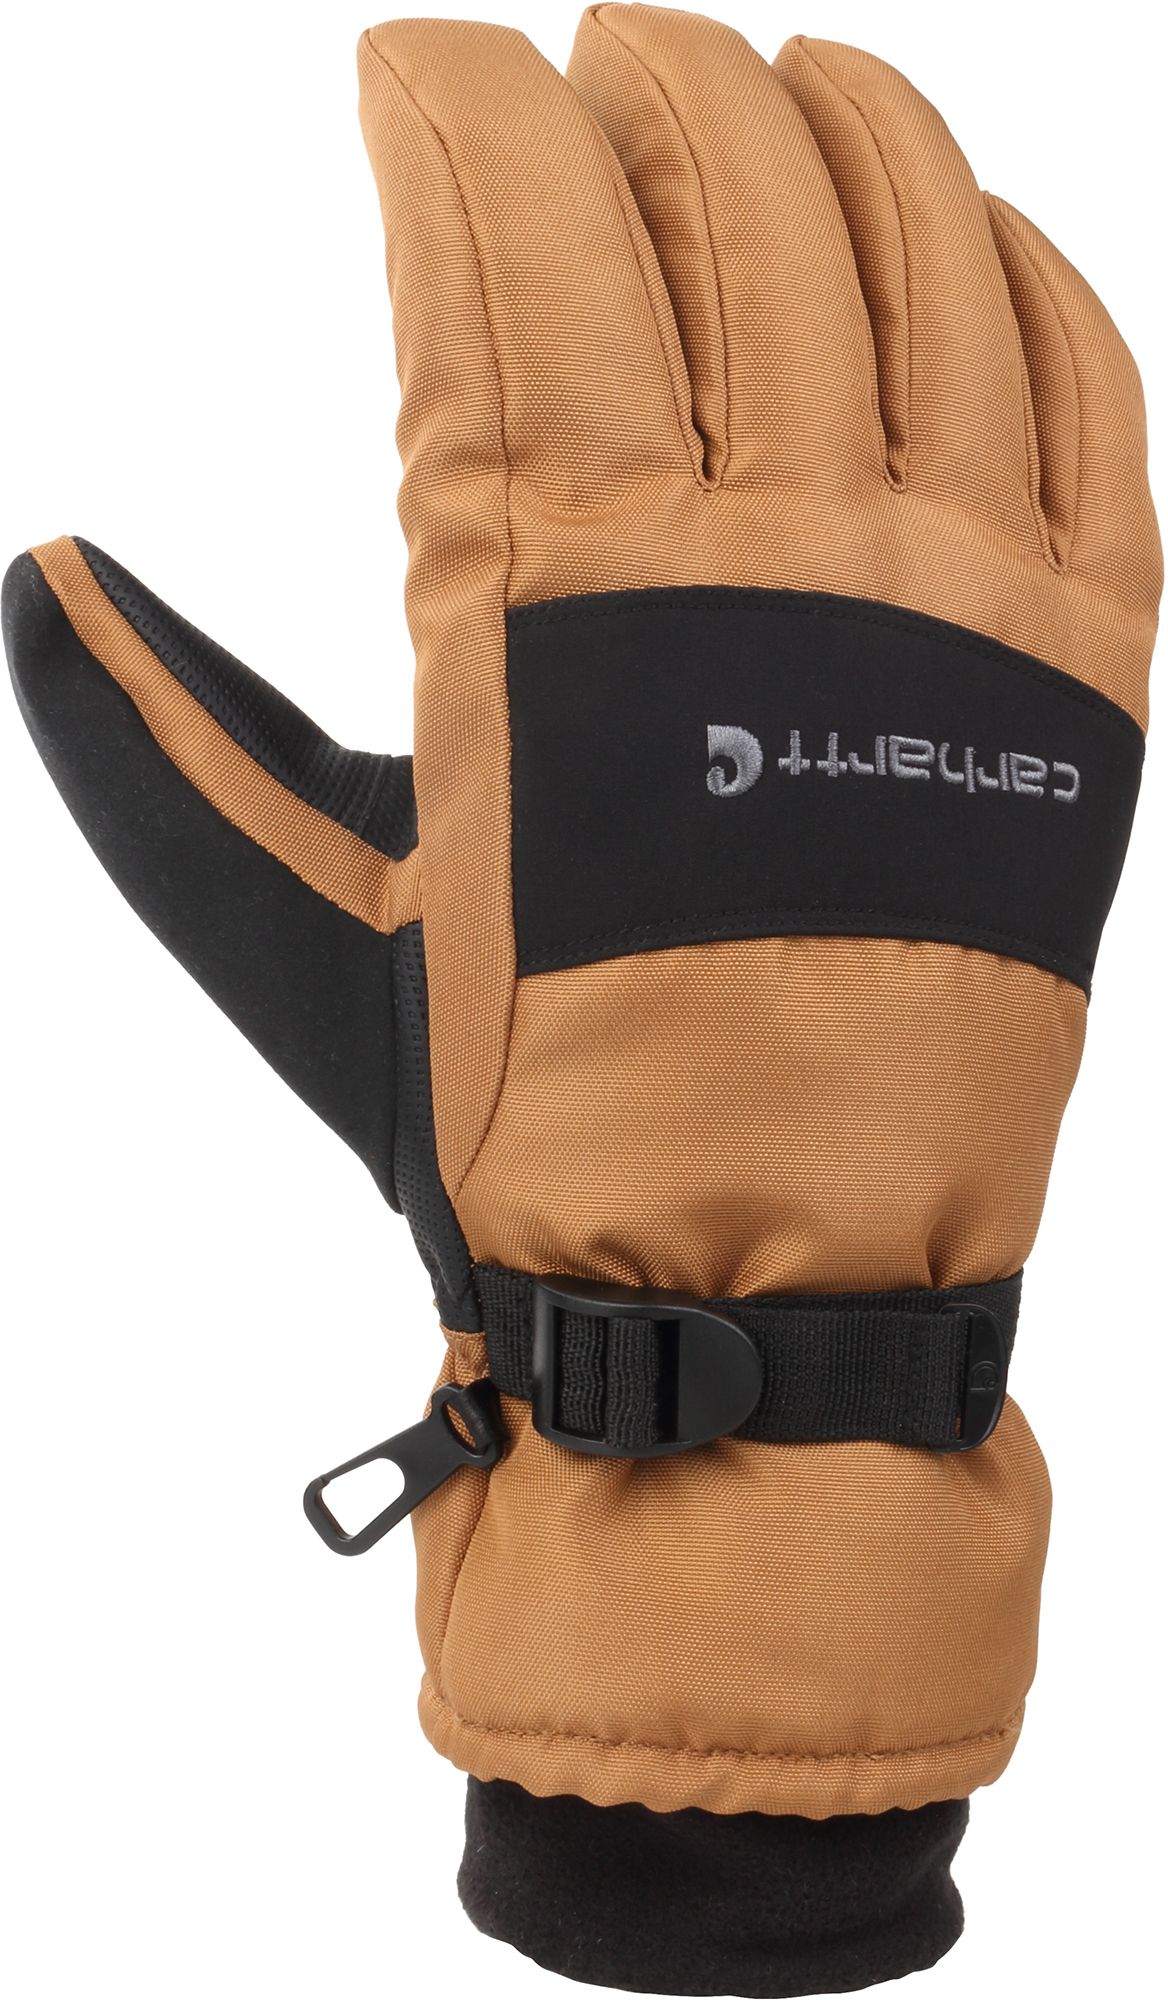 Carhartt Mens Waterproof Insulated Knit Cuff Gloves